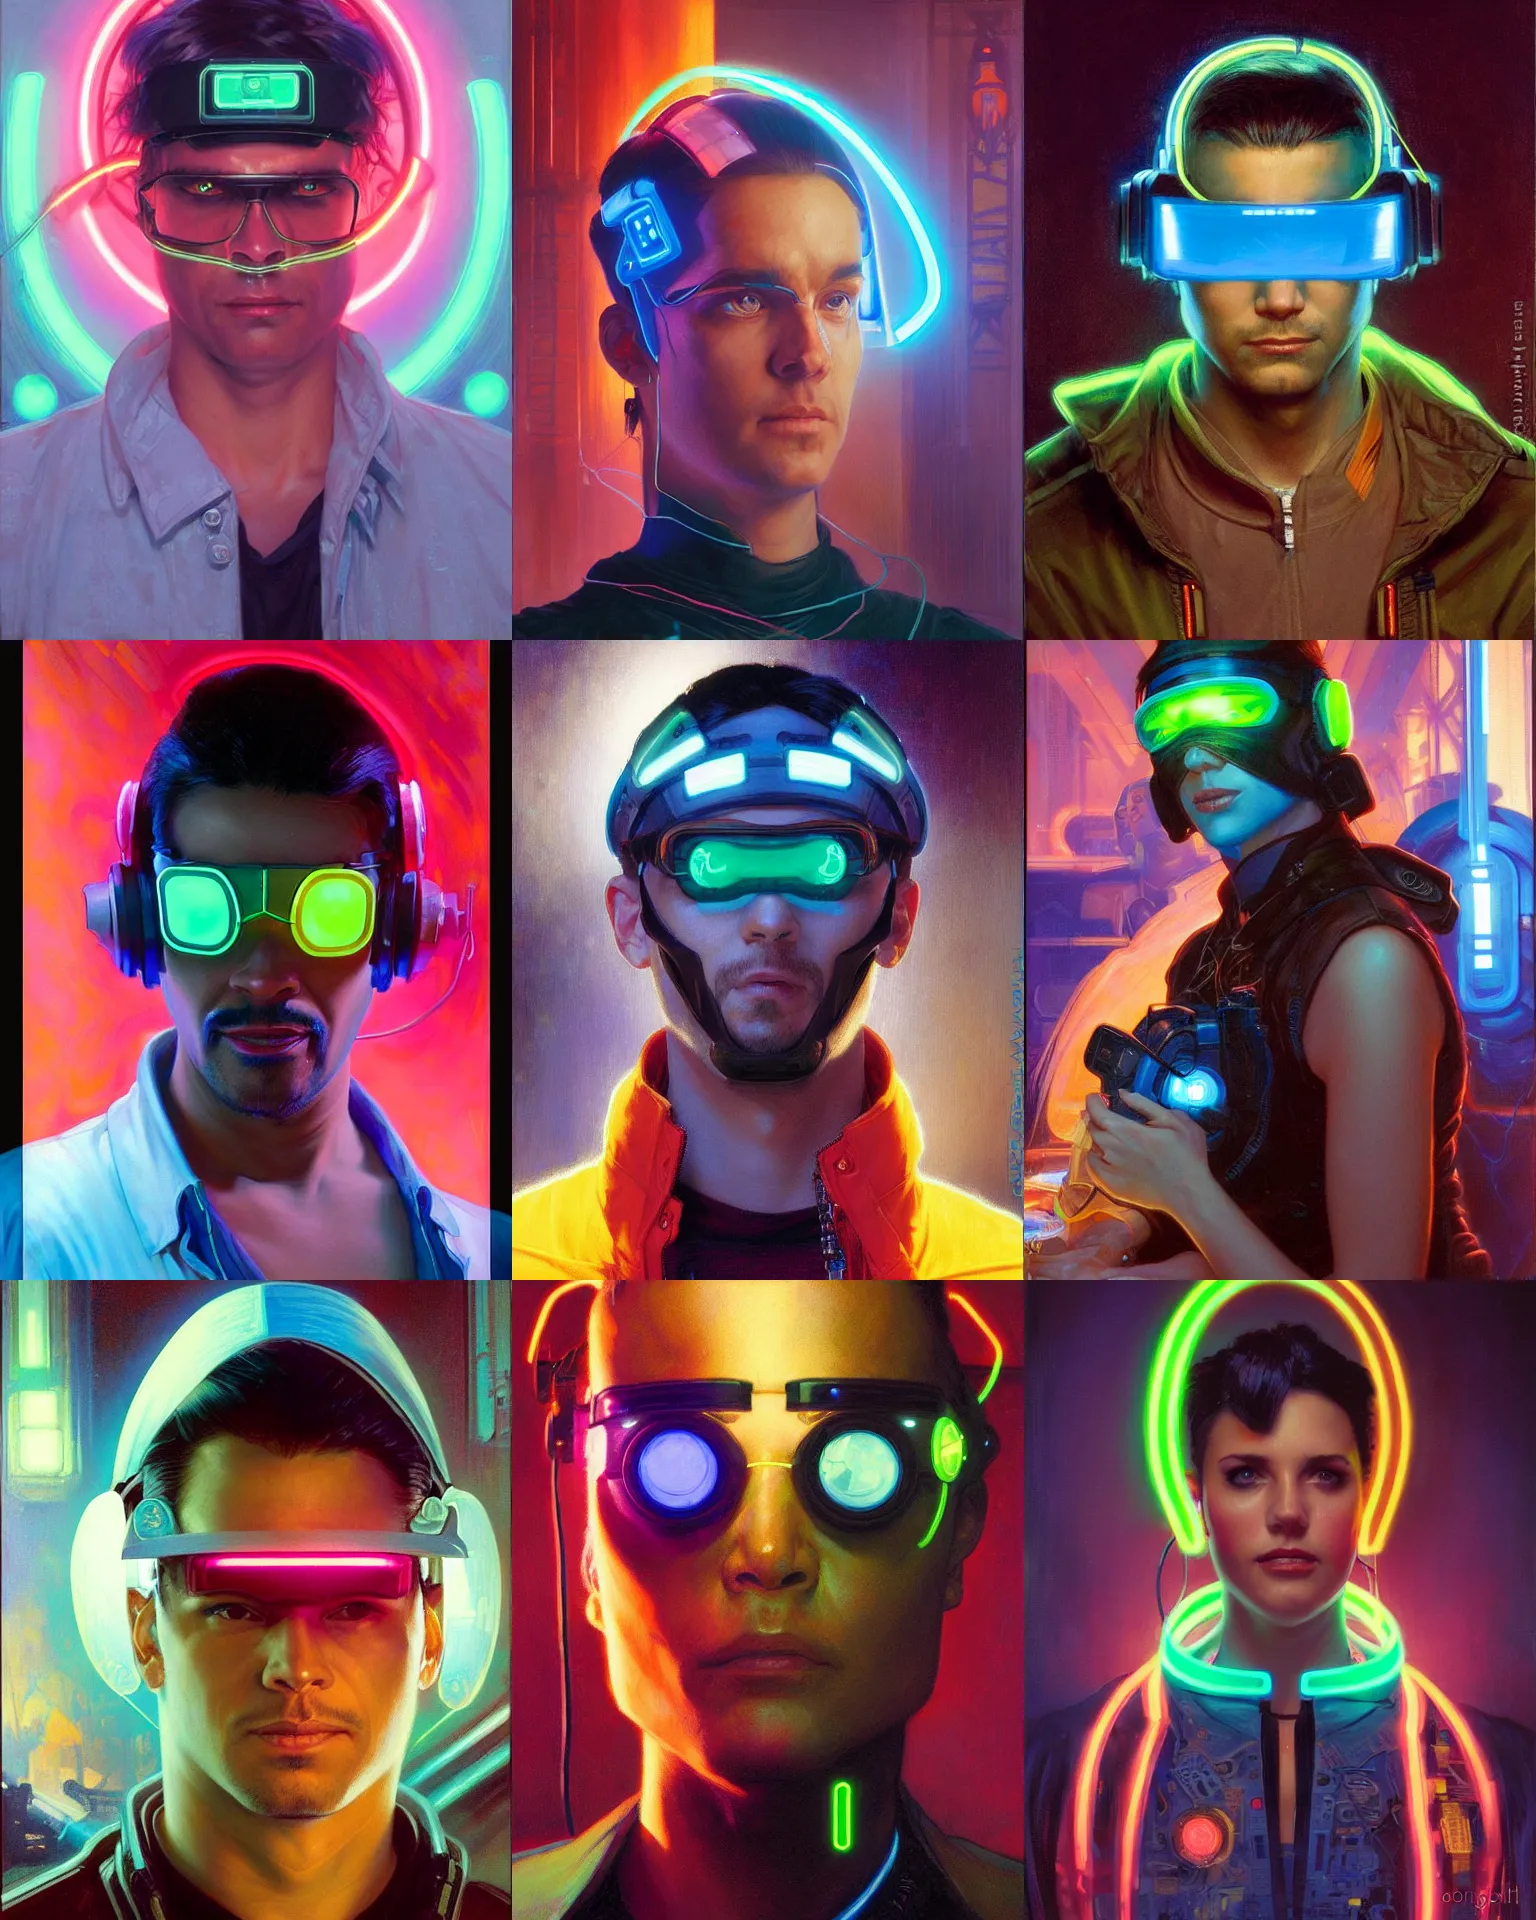 Prompt: neon cyberpunk hacker with glowing geordi visor and headset headshot portrait painting by donato giancola, rhads, loish, alphonse mucha, mead schaeffer fashion photography